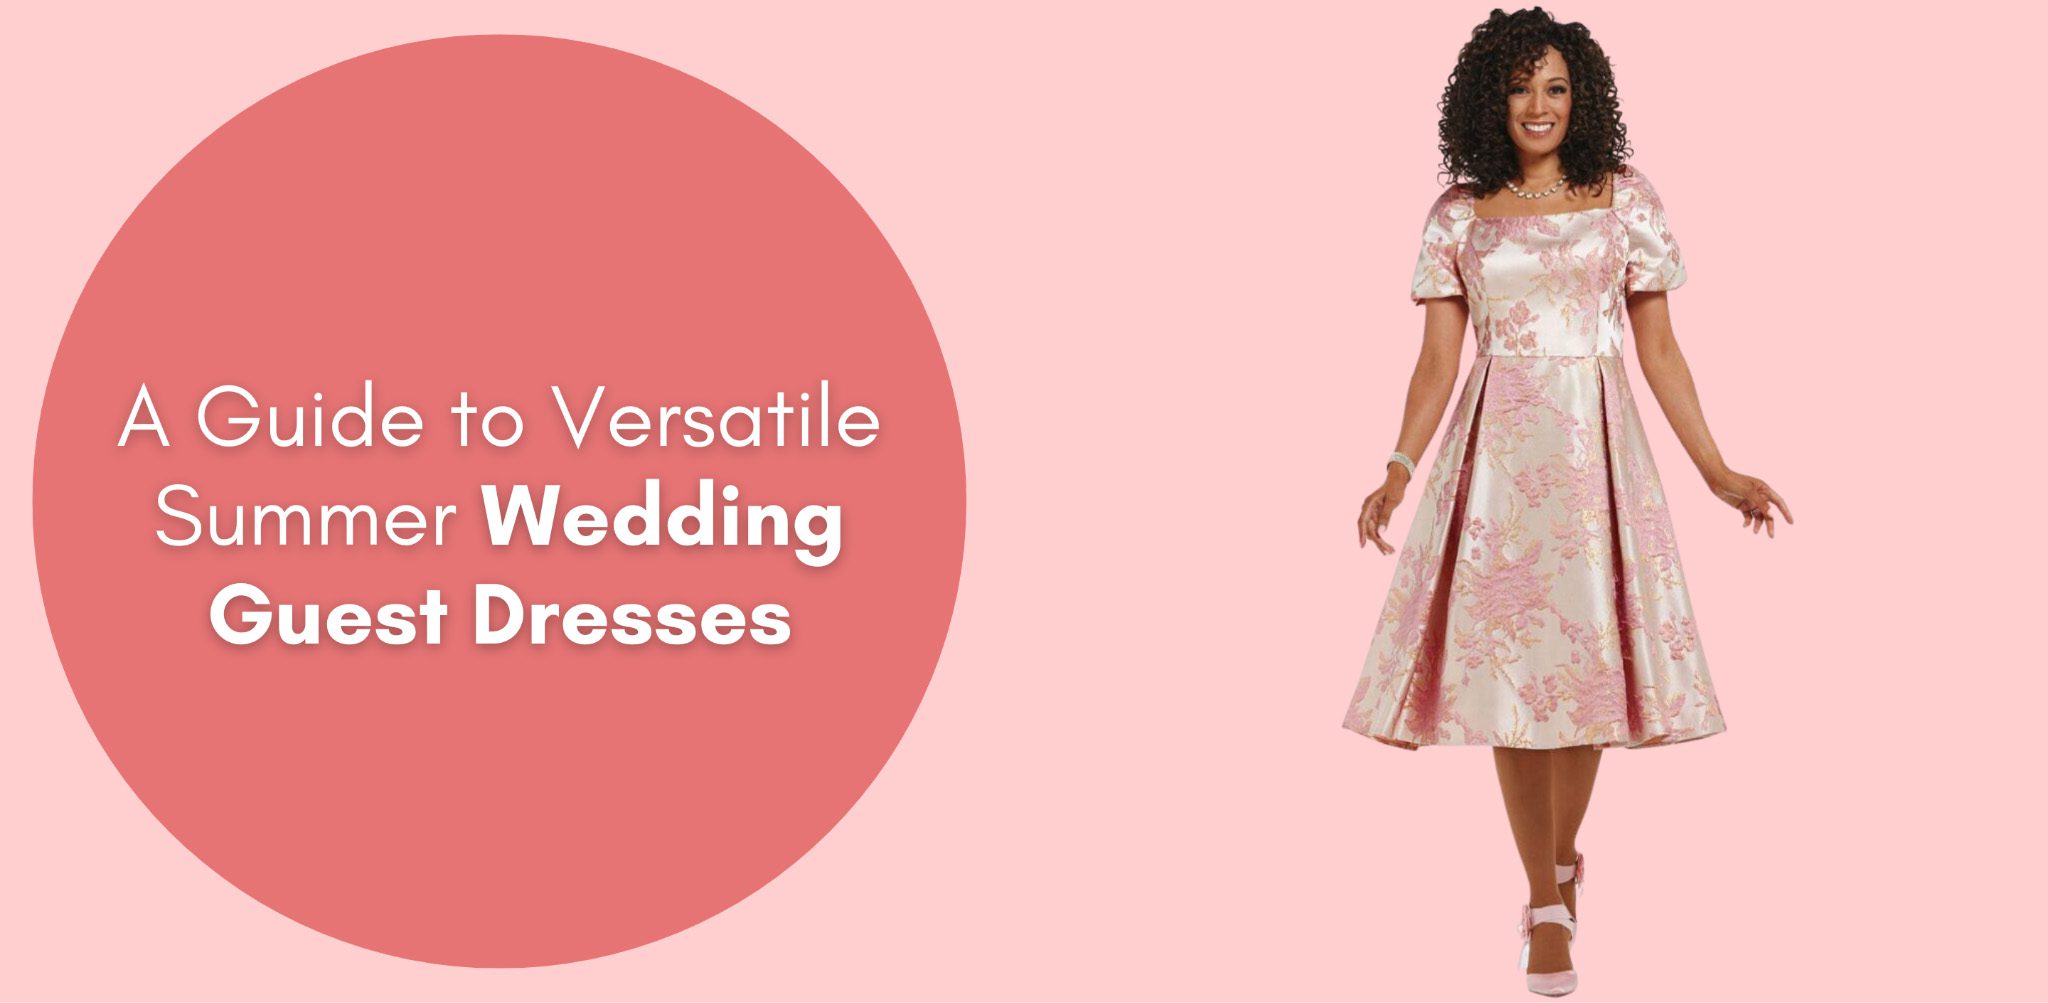 A Guide to Versatile Summer Wedding Guest Dresses